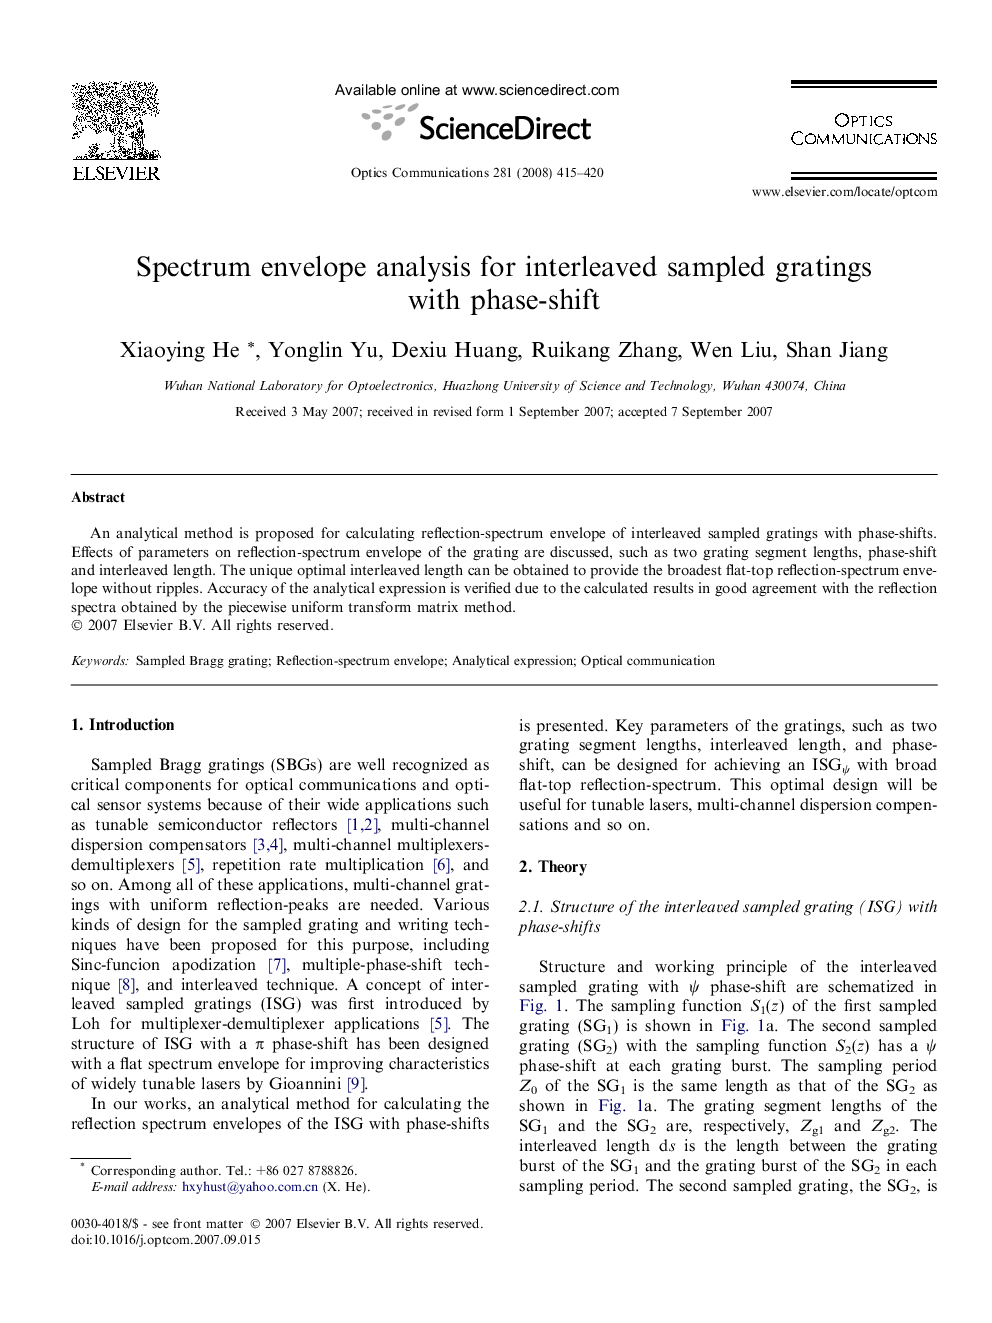 Spectrum envelope analysis for interleaved sampled gratings with phase-shift